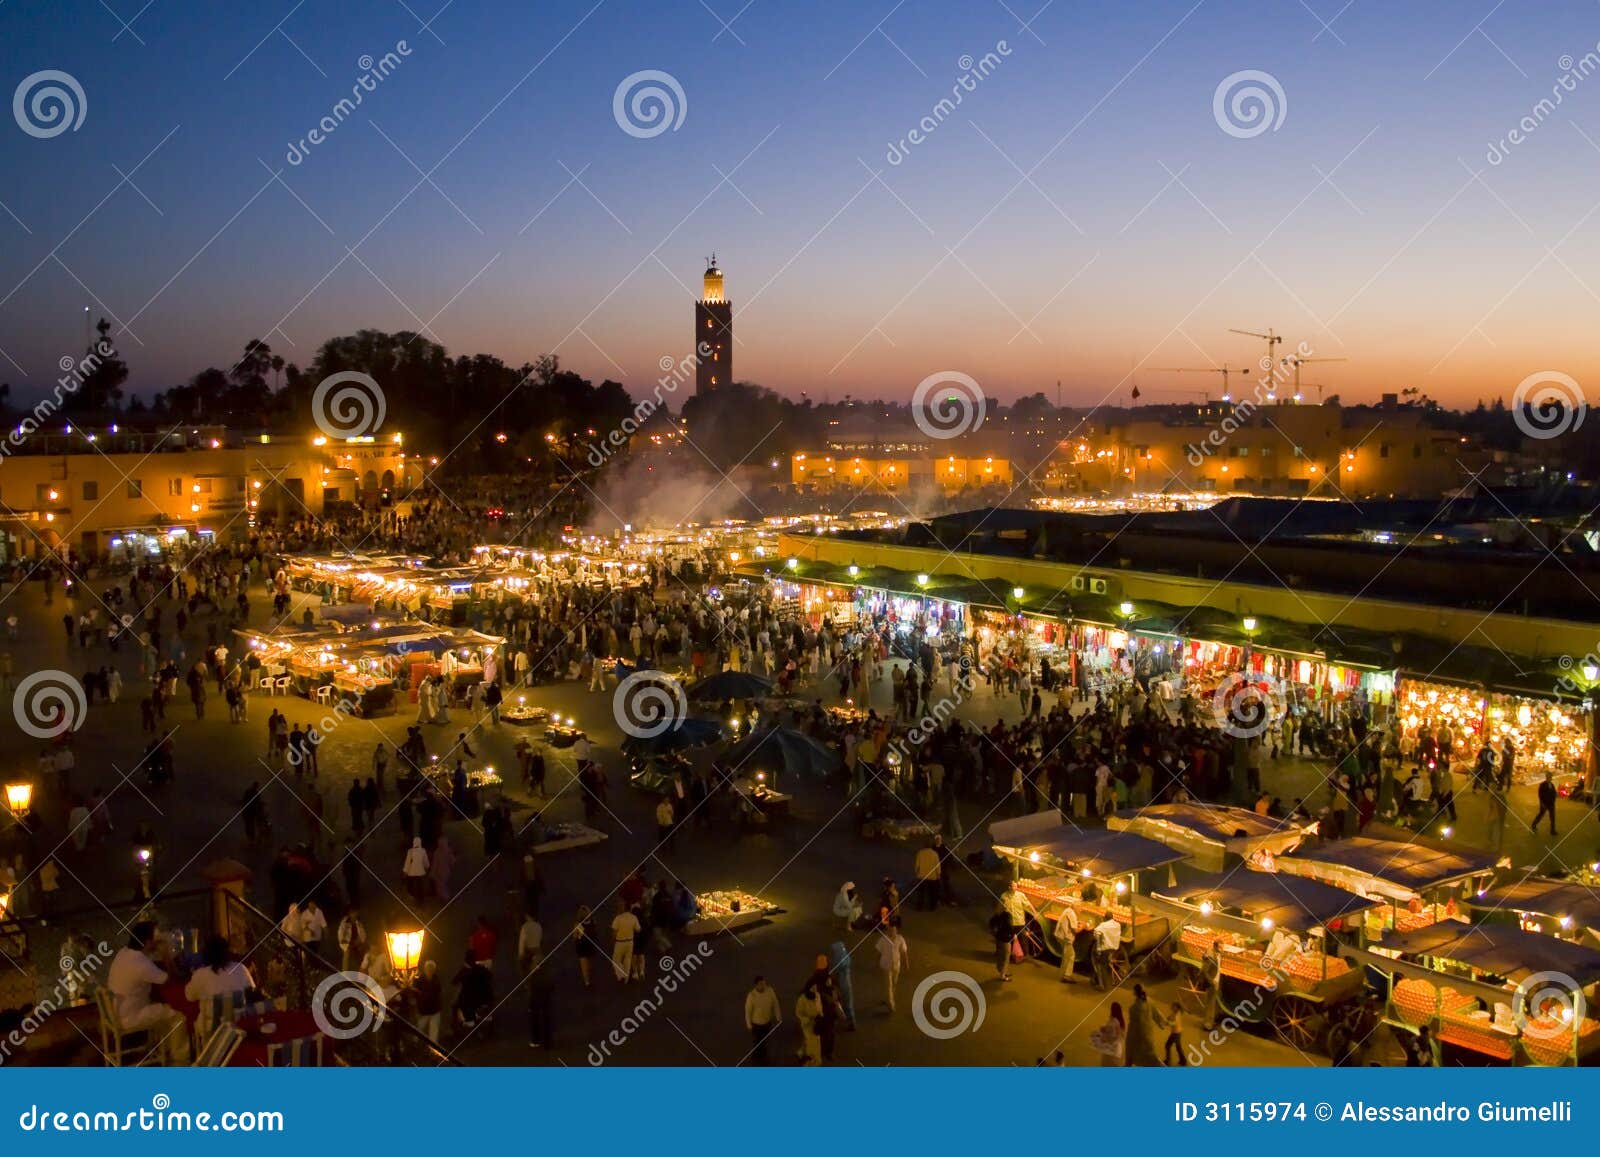 plaza djem el fnaa marrakech